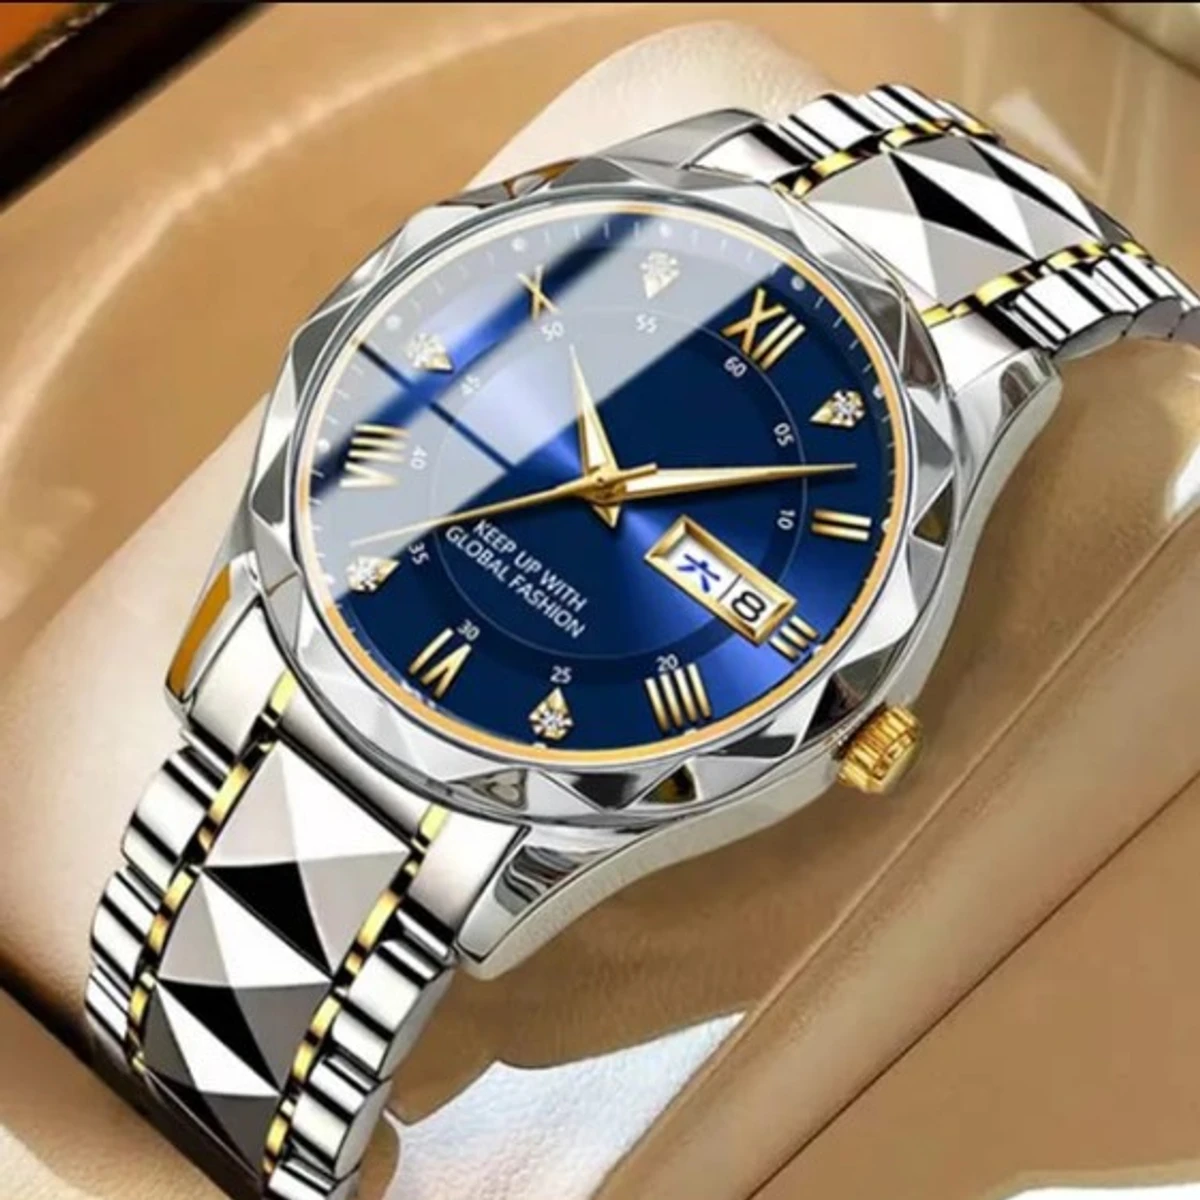 POEDAGAR Luxury Men Watches Business Top Brand Man Wristwatch Waterproof Luminous Date Week Quartz Men's Watch High Quality+Box-Silver&Green